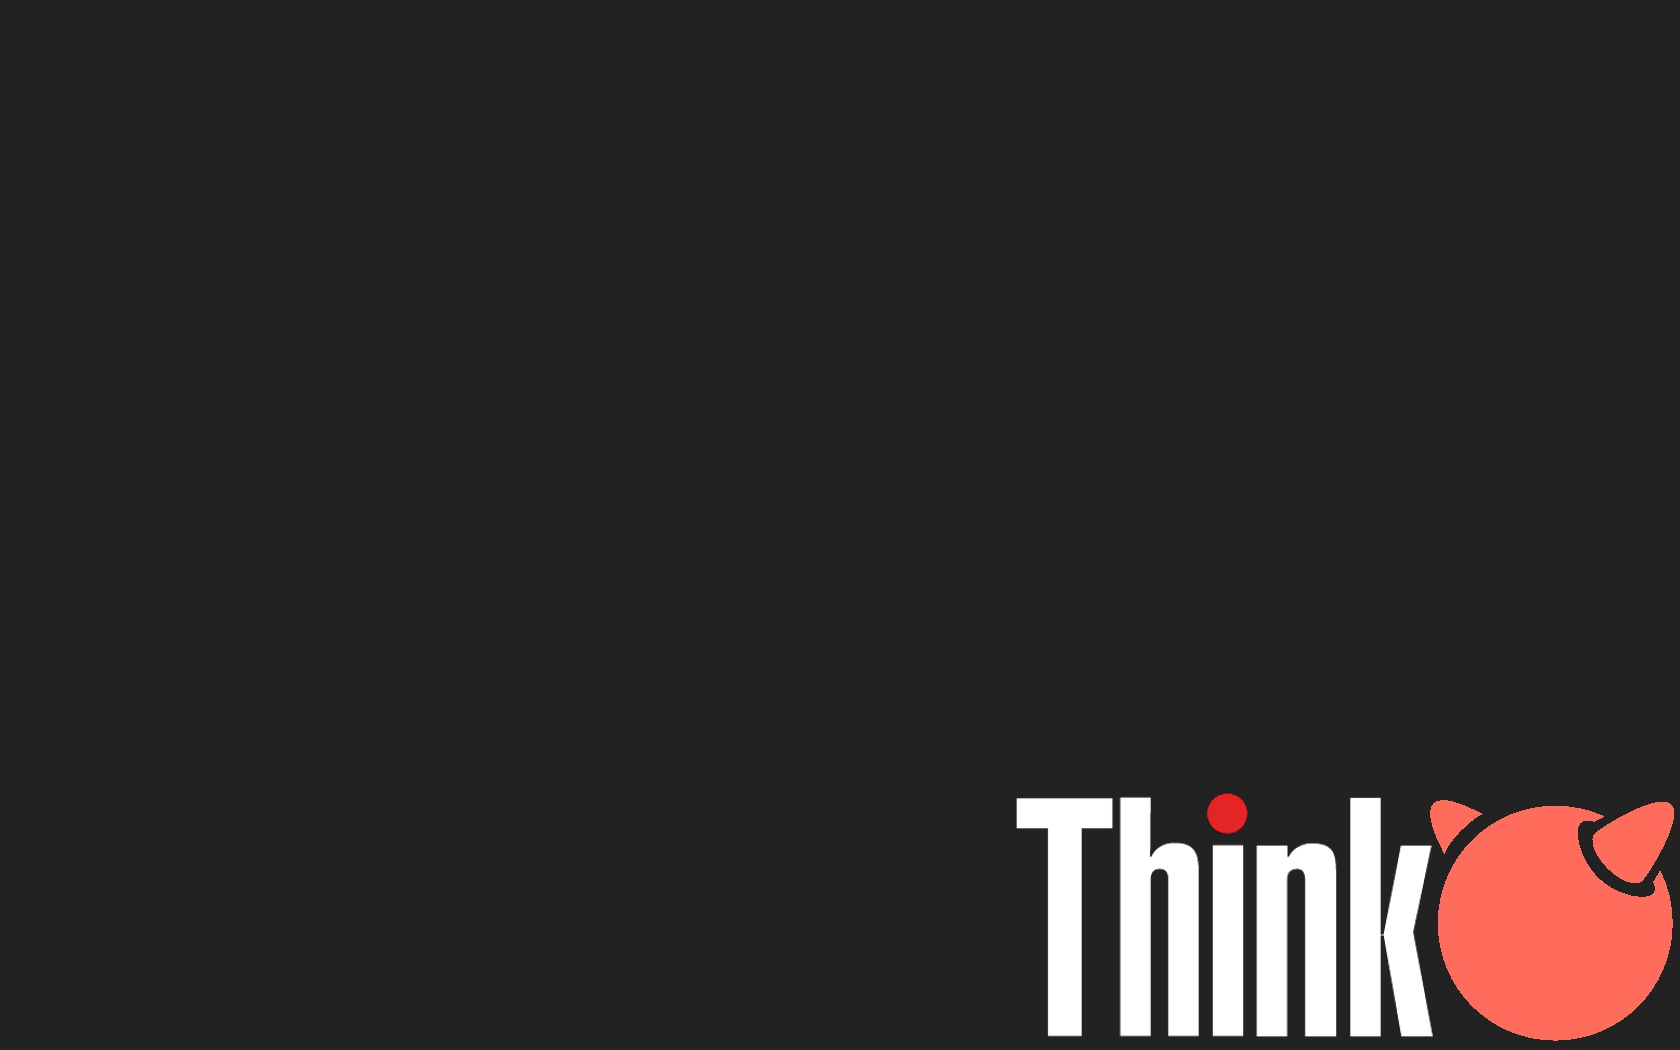 General 1680x1050 bsd freebsd ThinkPad minimalism simple background black background typography